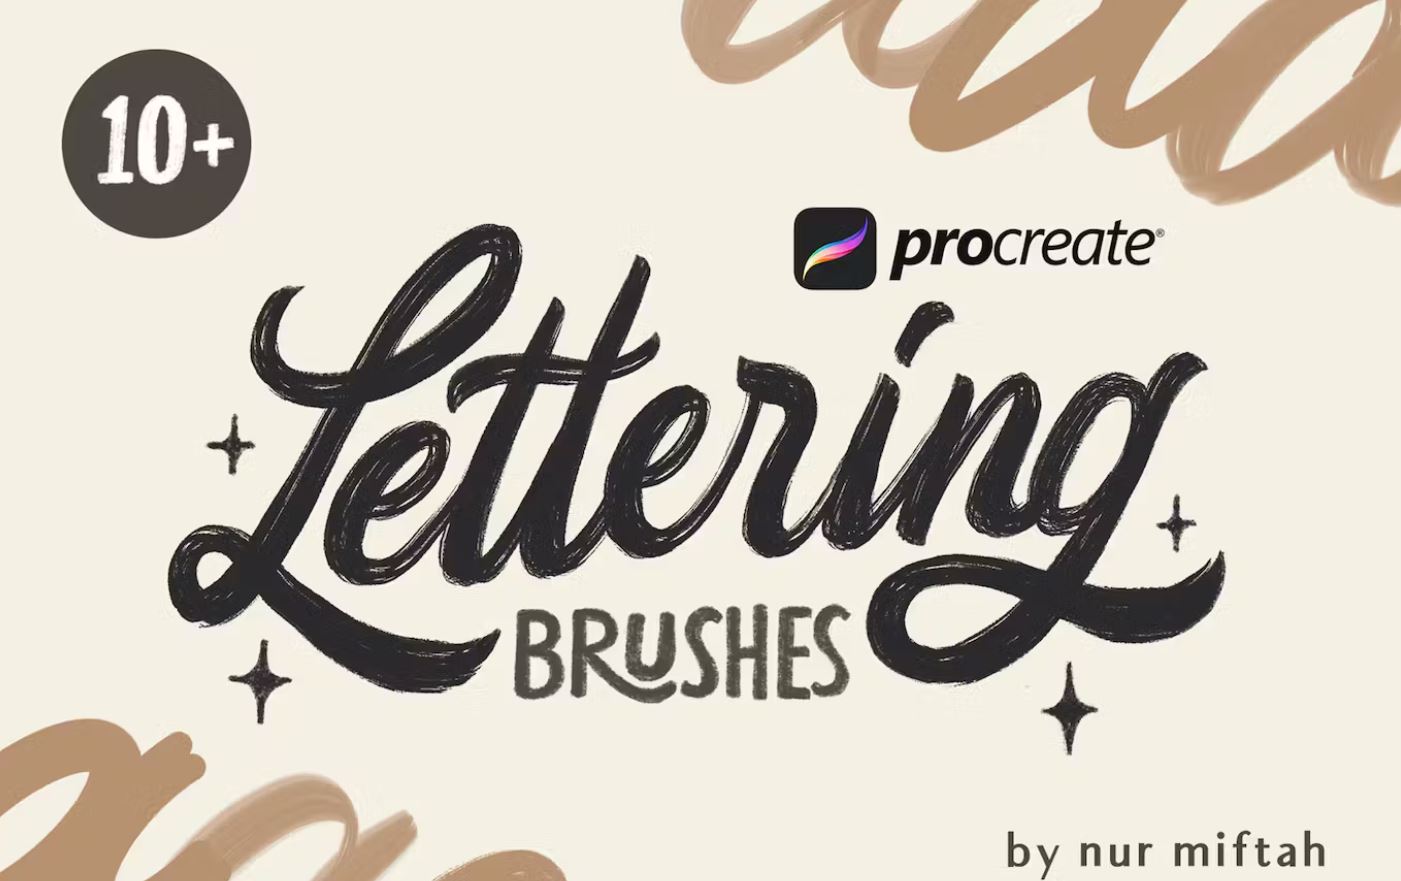 3D Paint Lettering Procreate Brushes Set for Digital Artwork